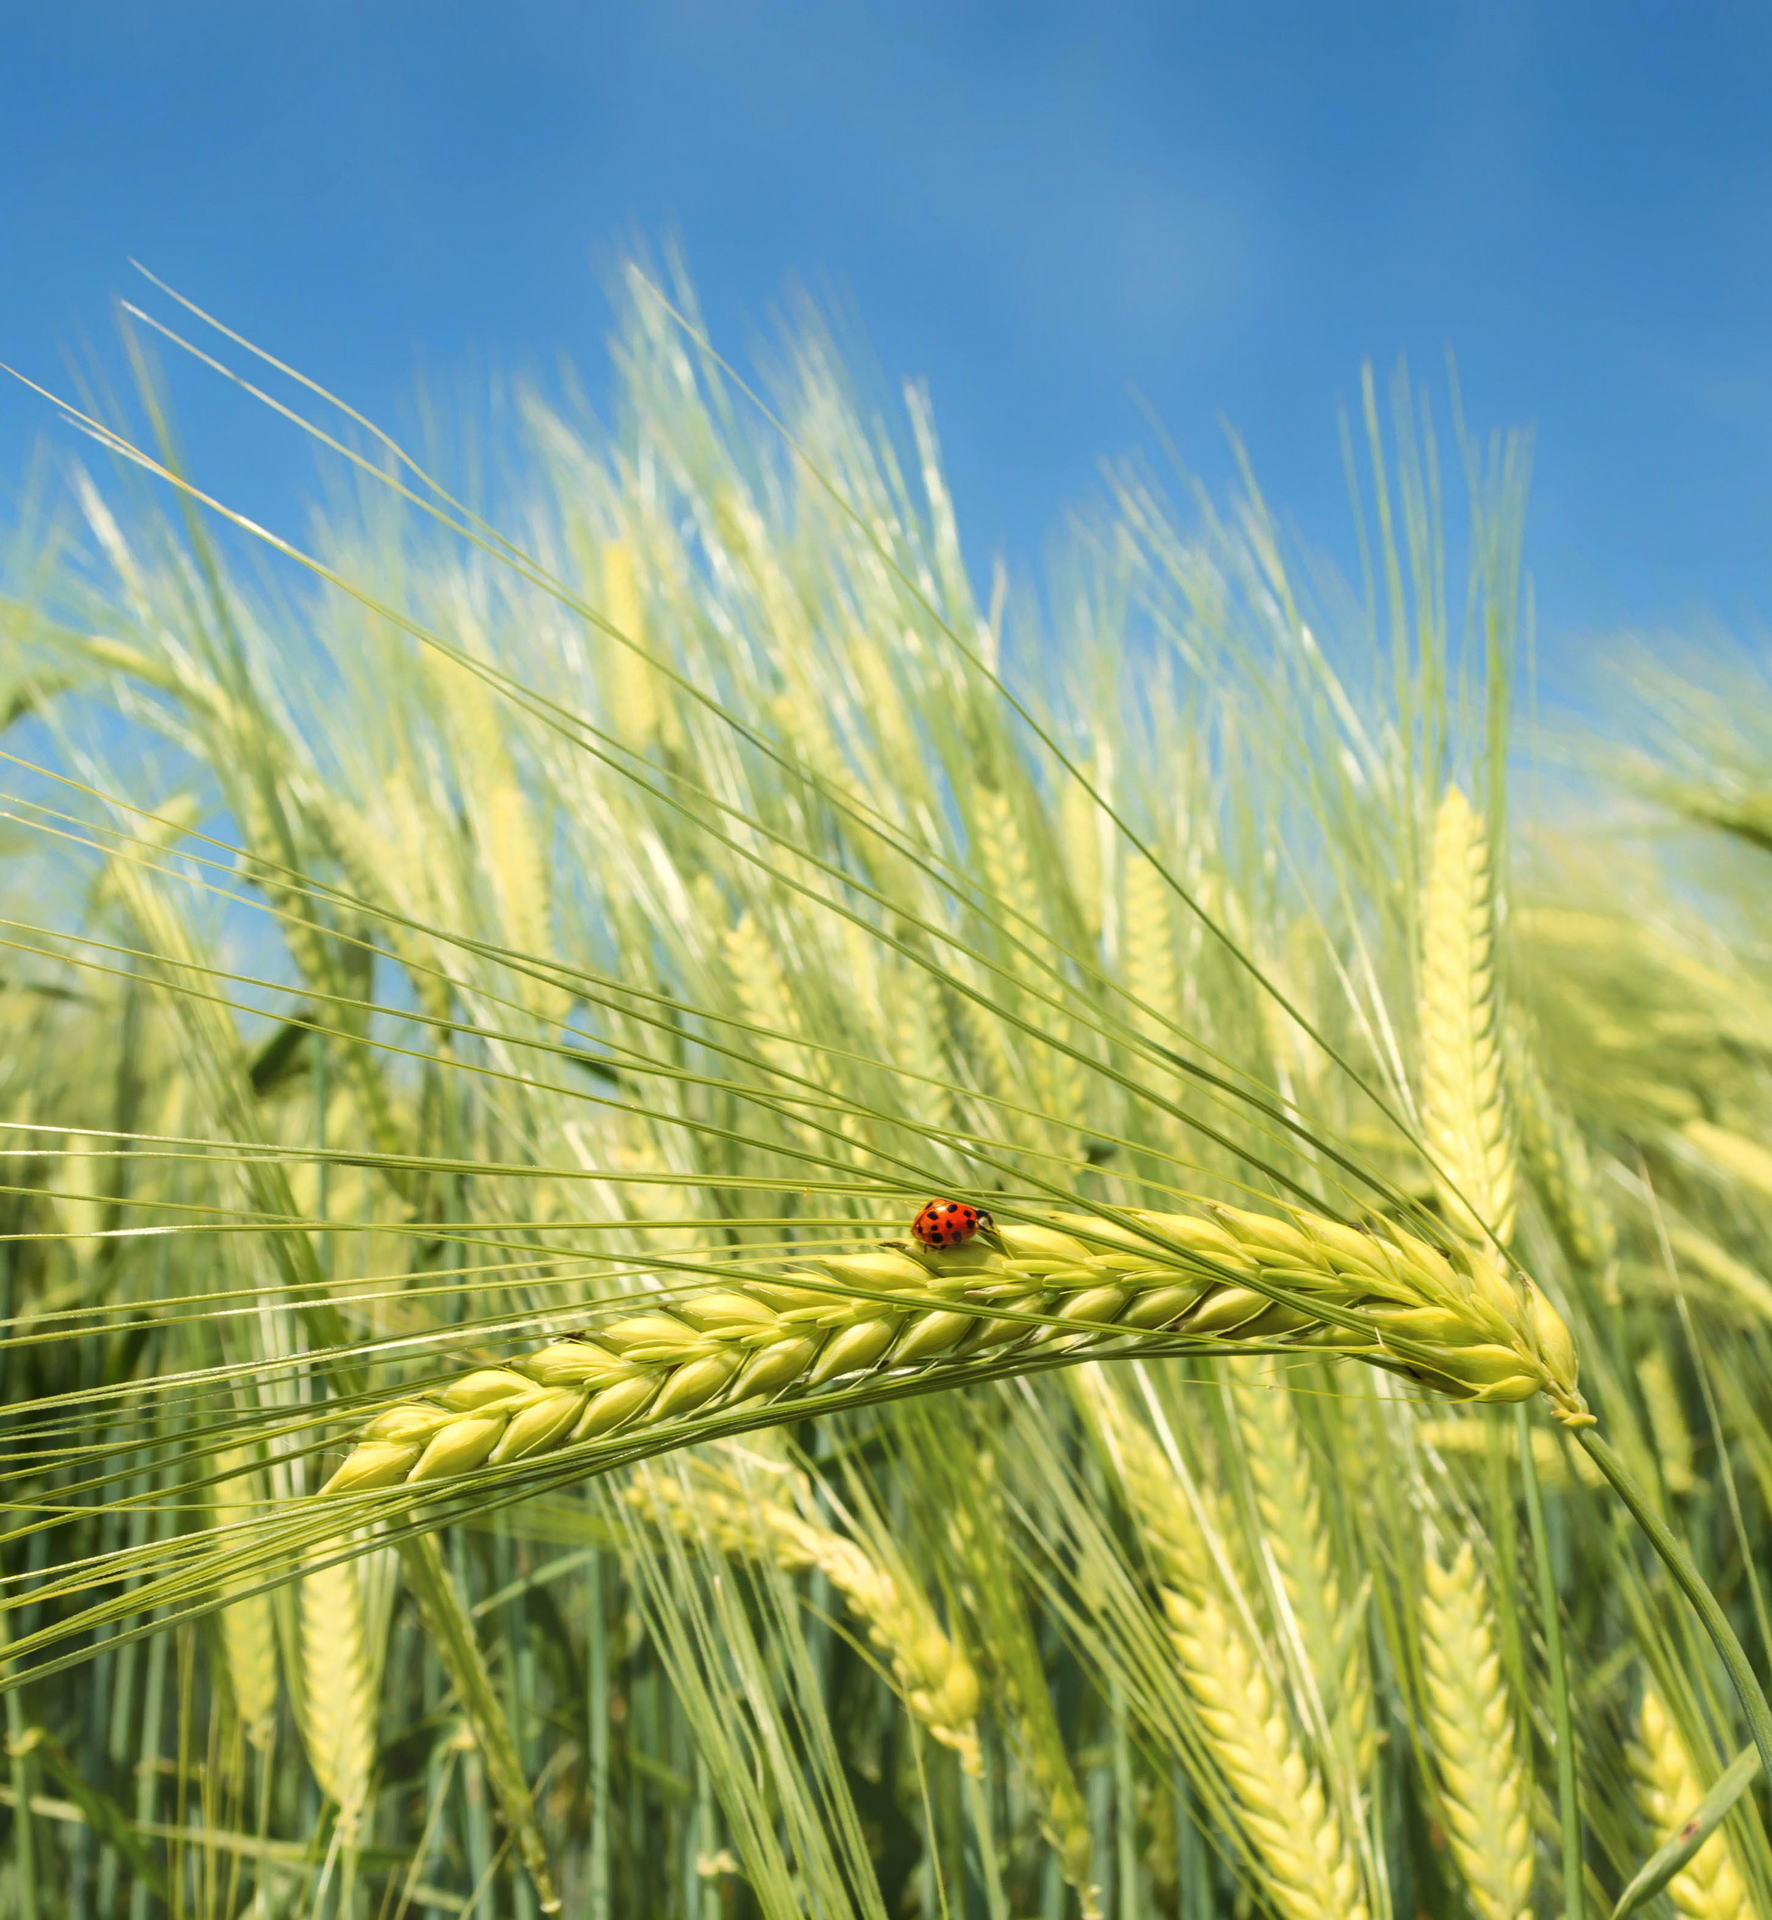 Green,barley,,wheat,ear,growing,in,agricultural,field.,green,unripe